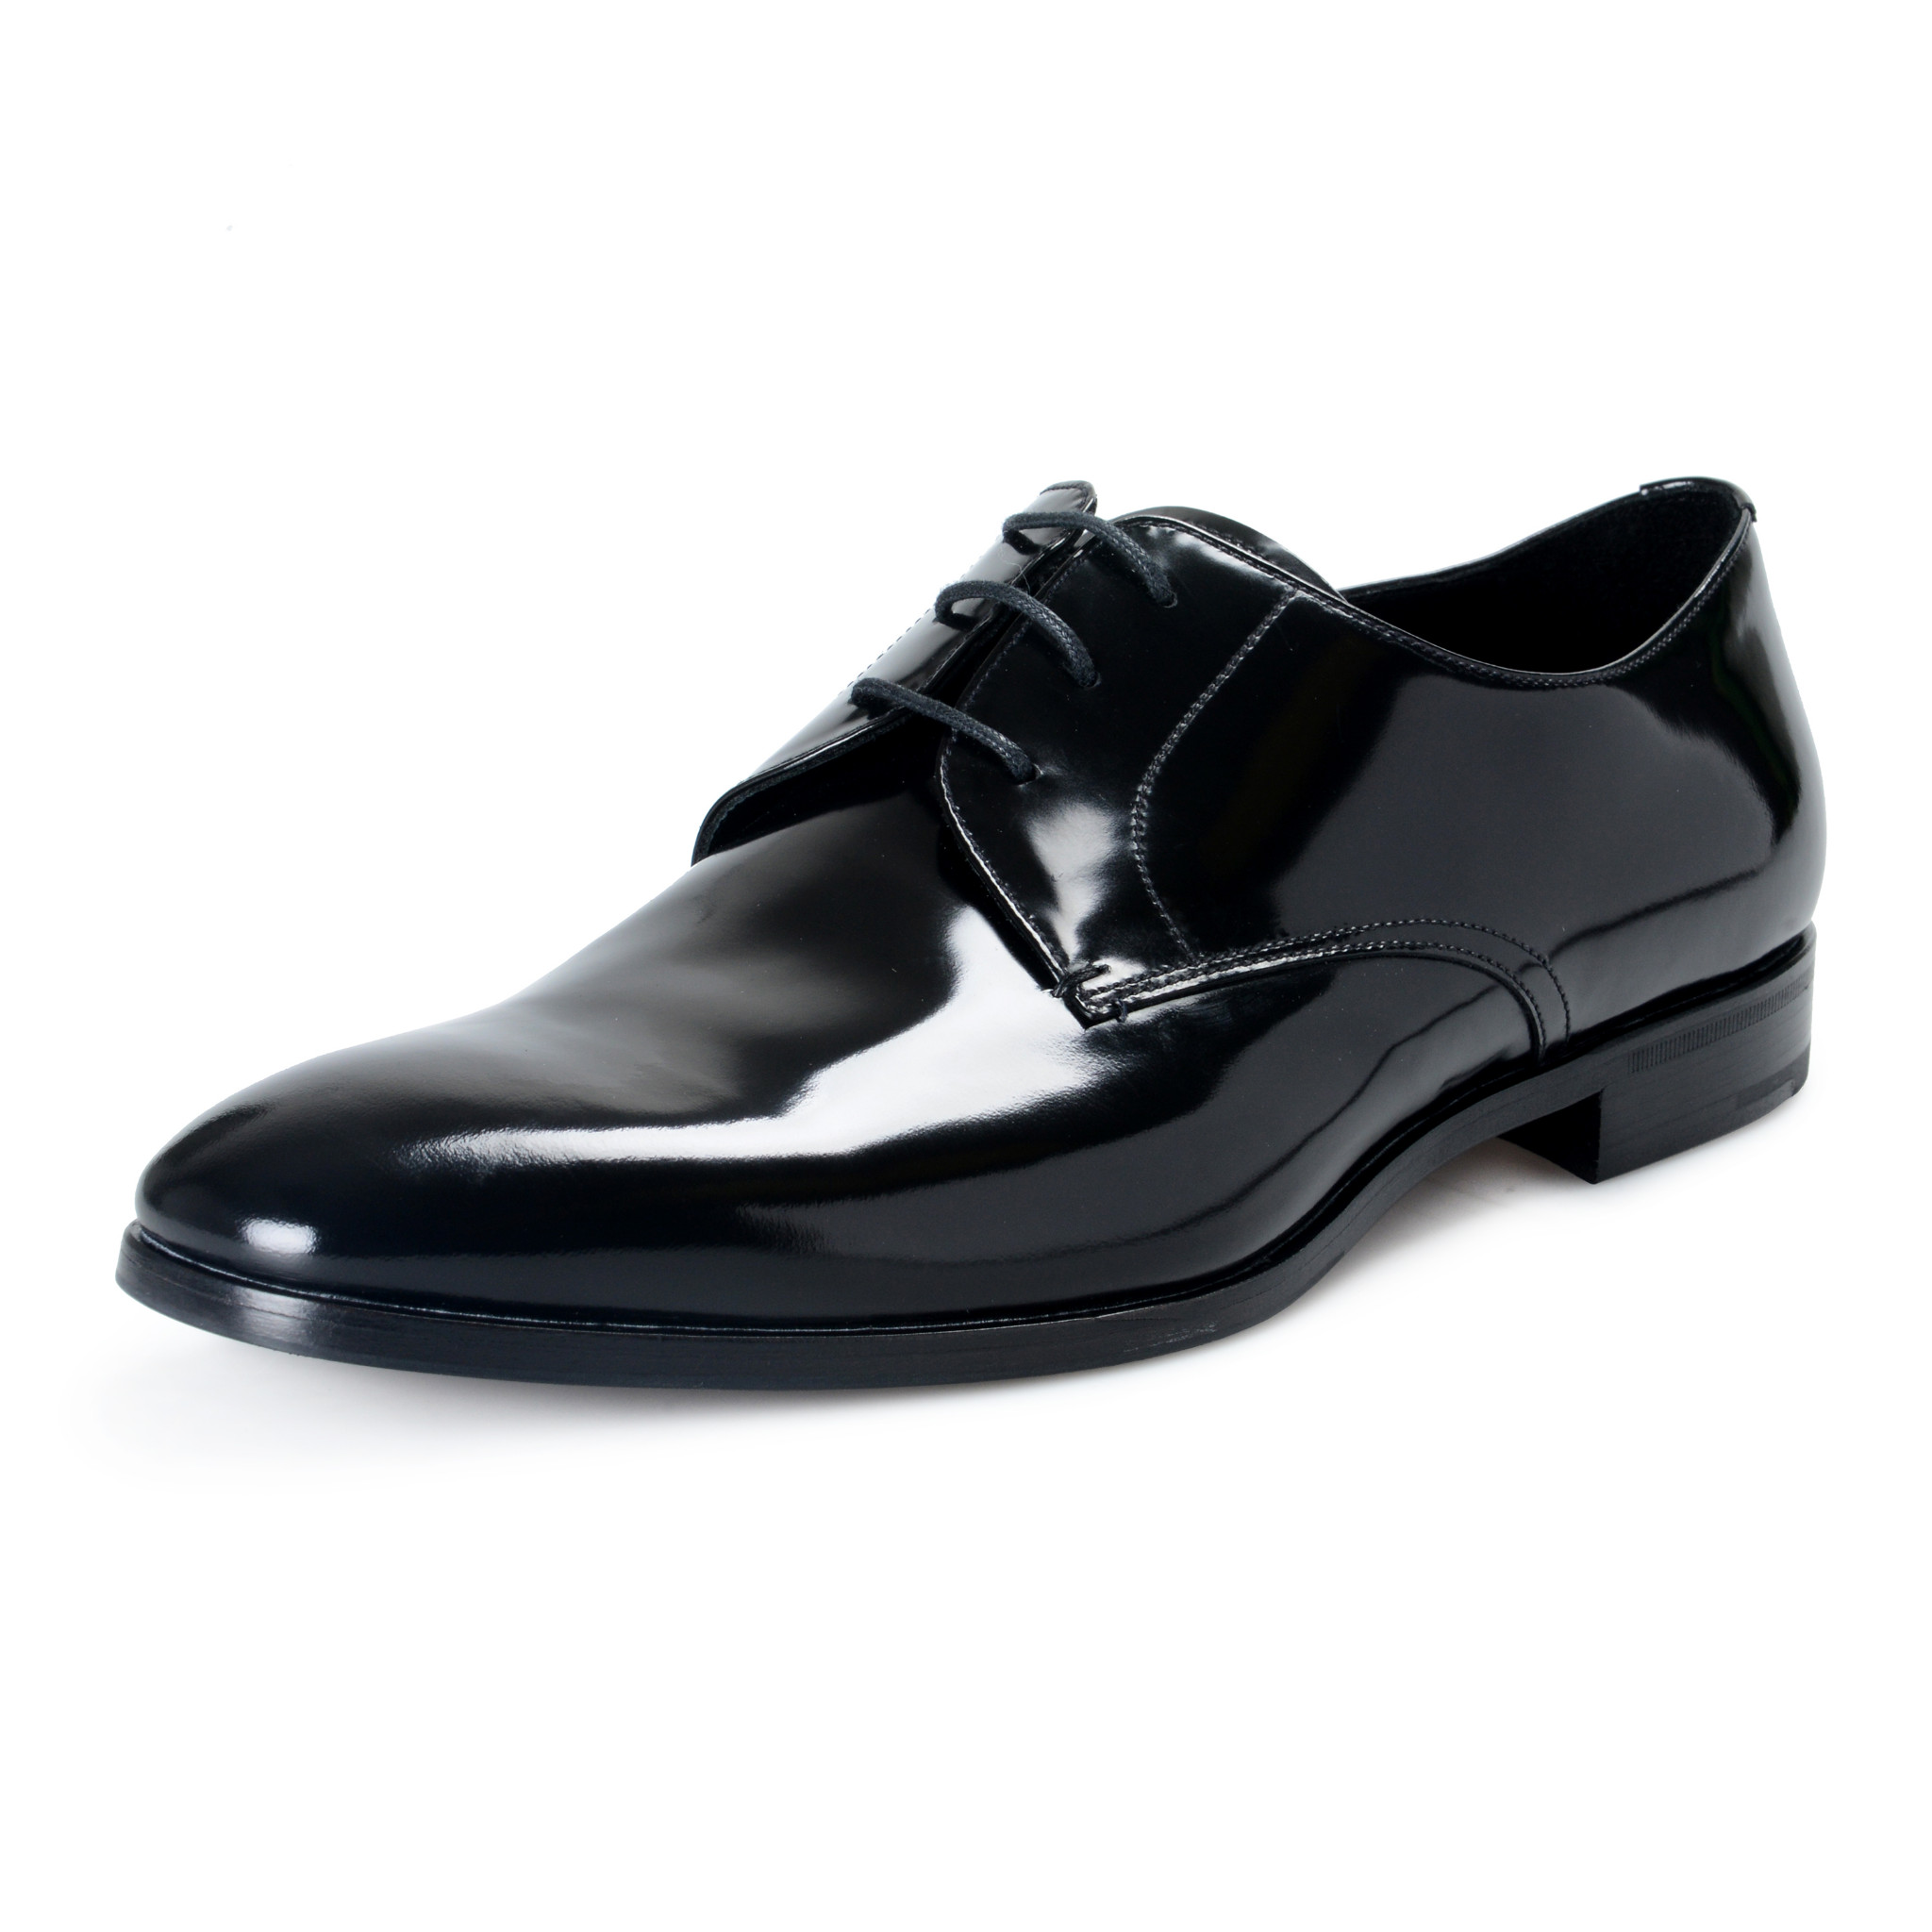 prada men's dress shoes black